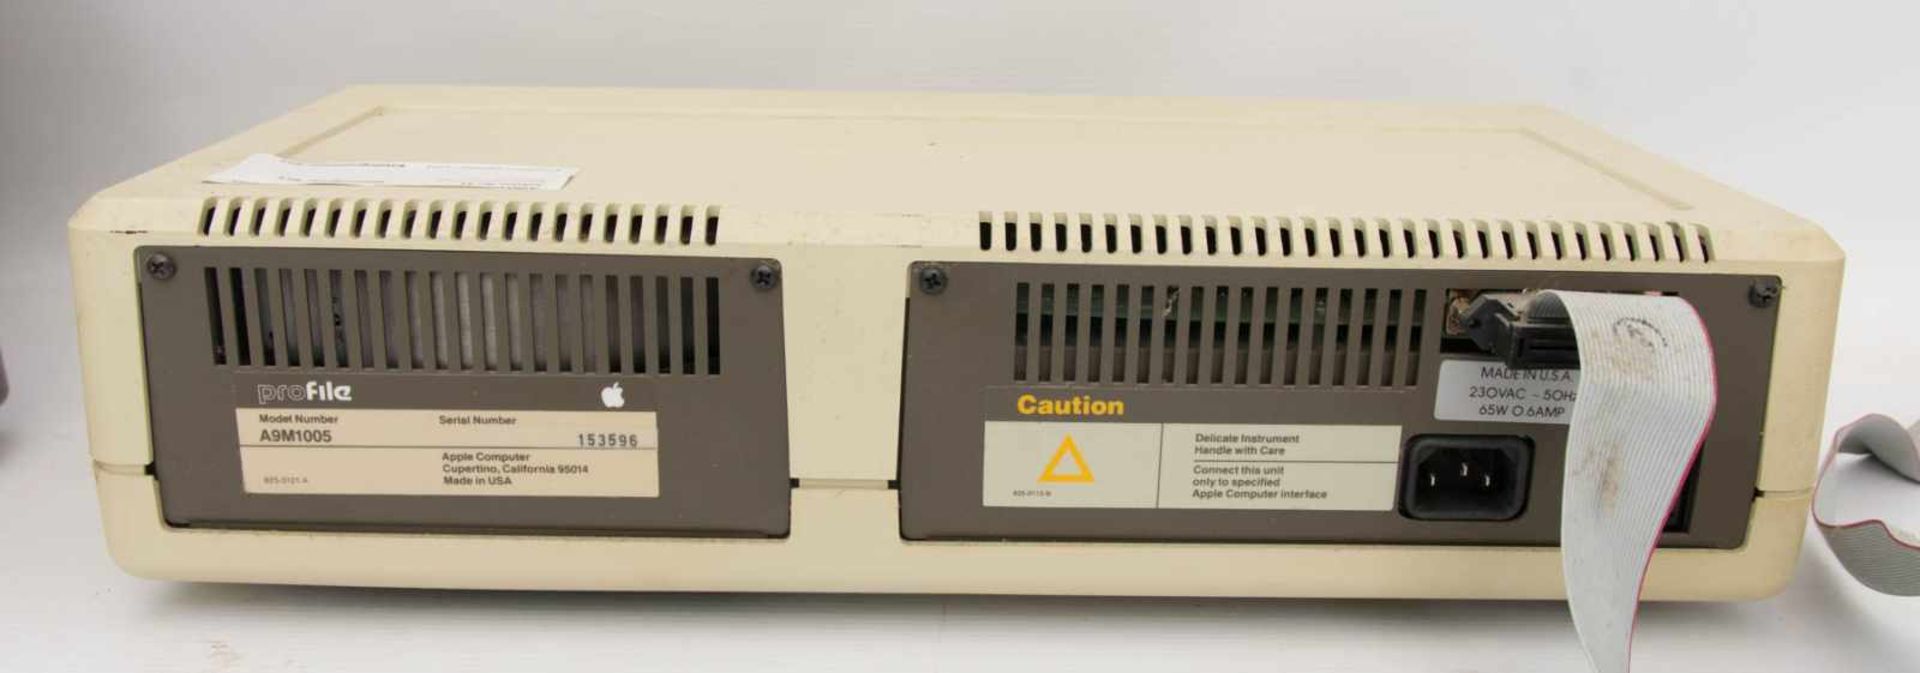 APPLE COMPUTER PRO FILE, Model Number A9M1005, Made in USA.Serien Nr. A9M1005-153596.43 x 22 x 9 cm - Bild 4 aus 5